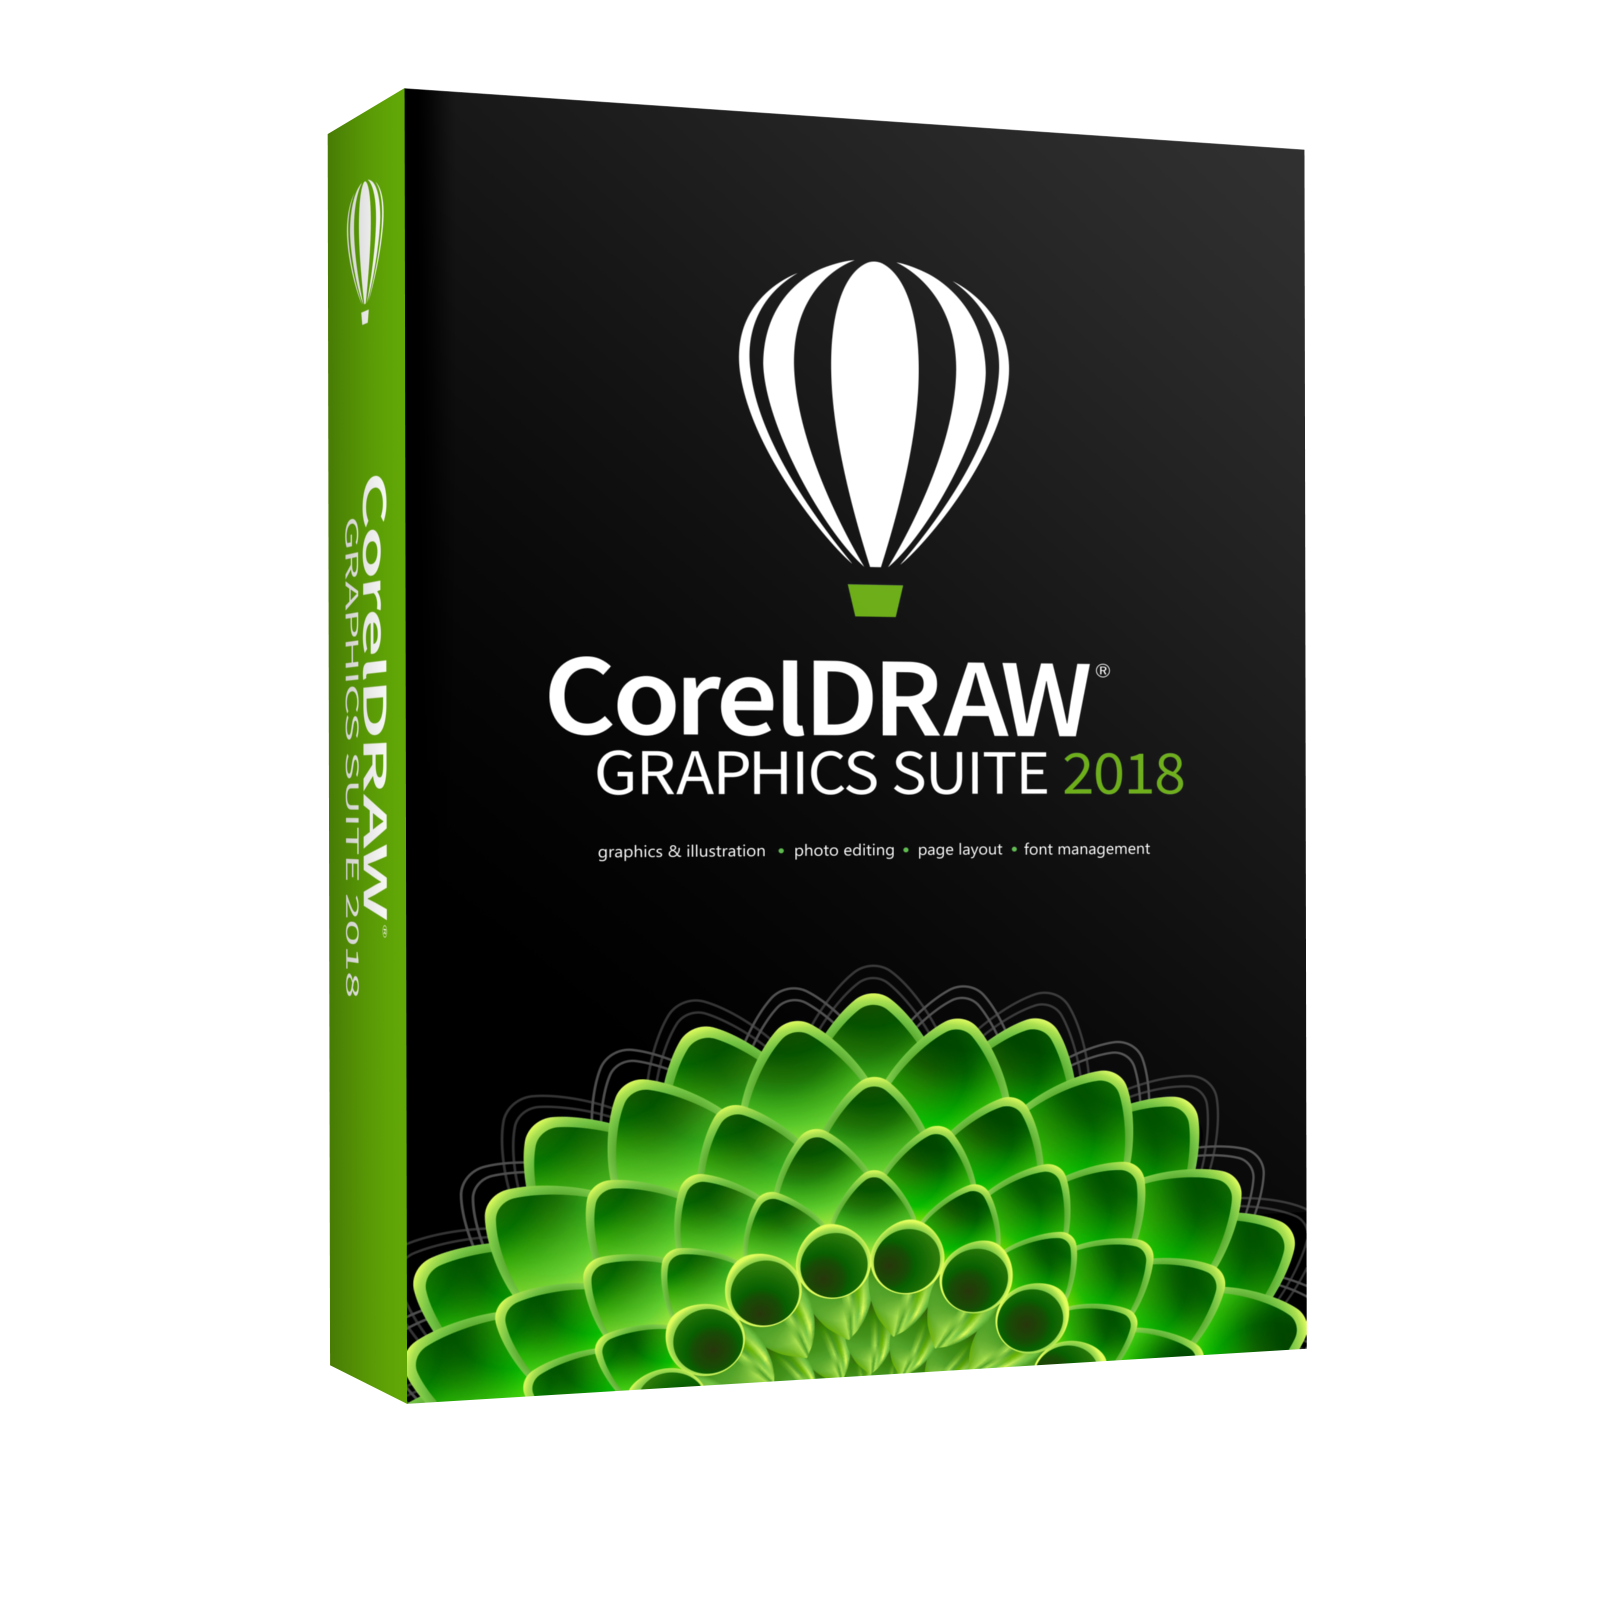 coreldraw graphics suite 2018 download full version